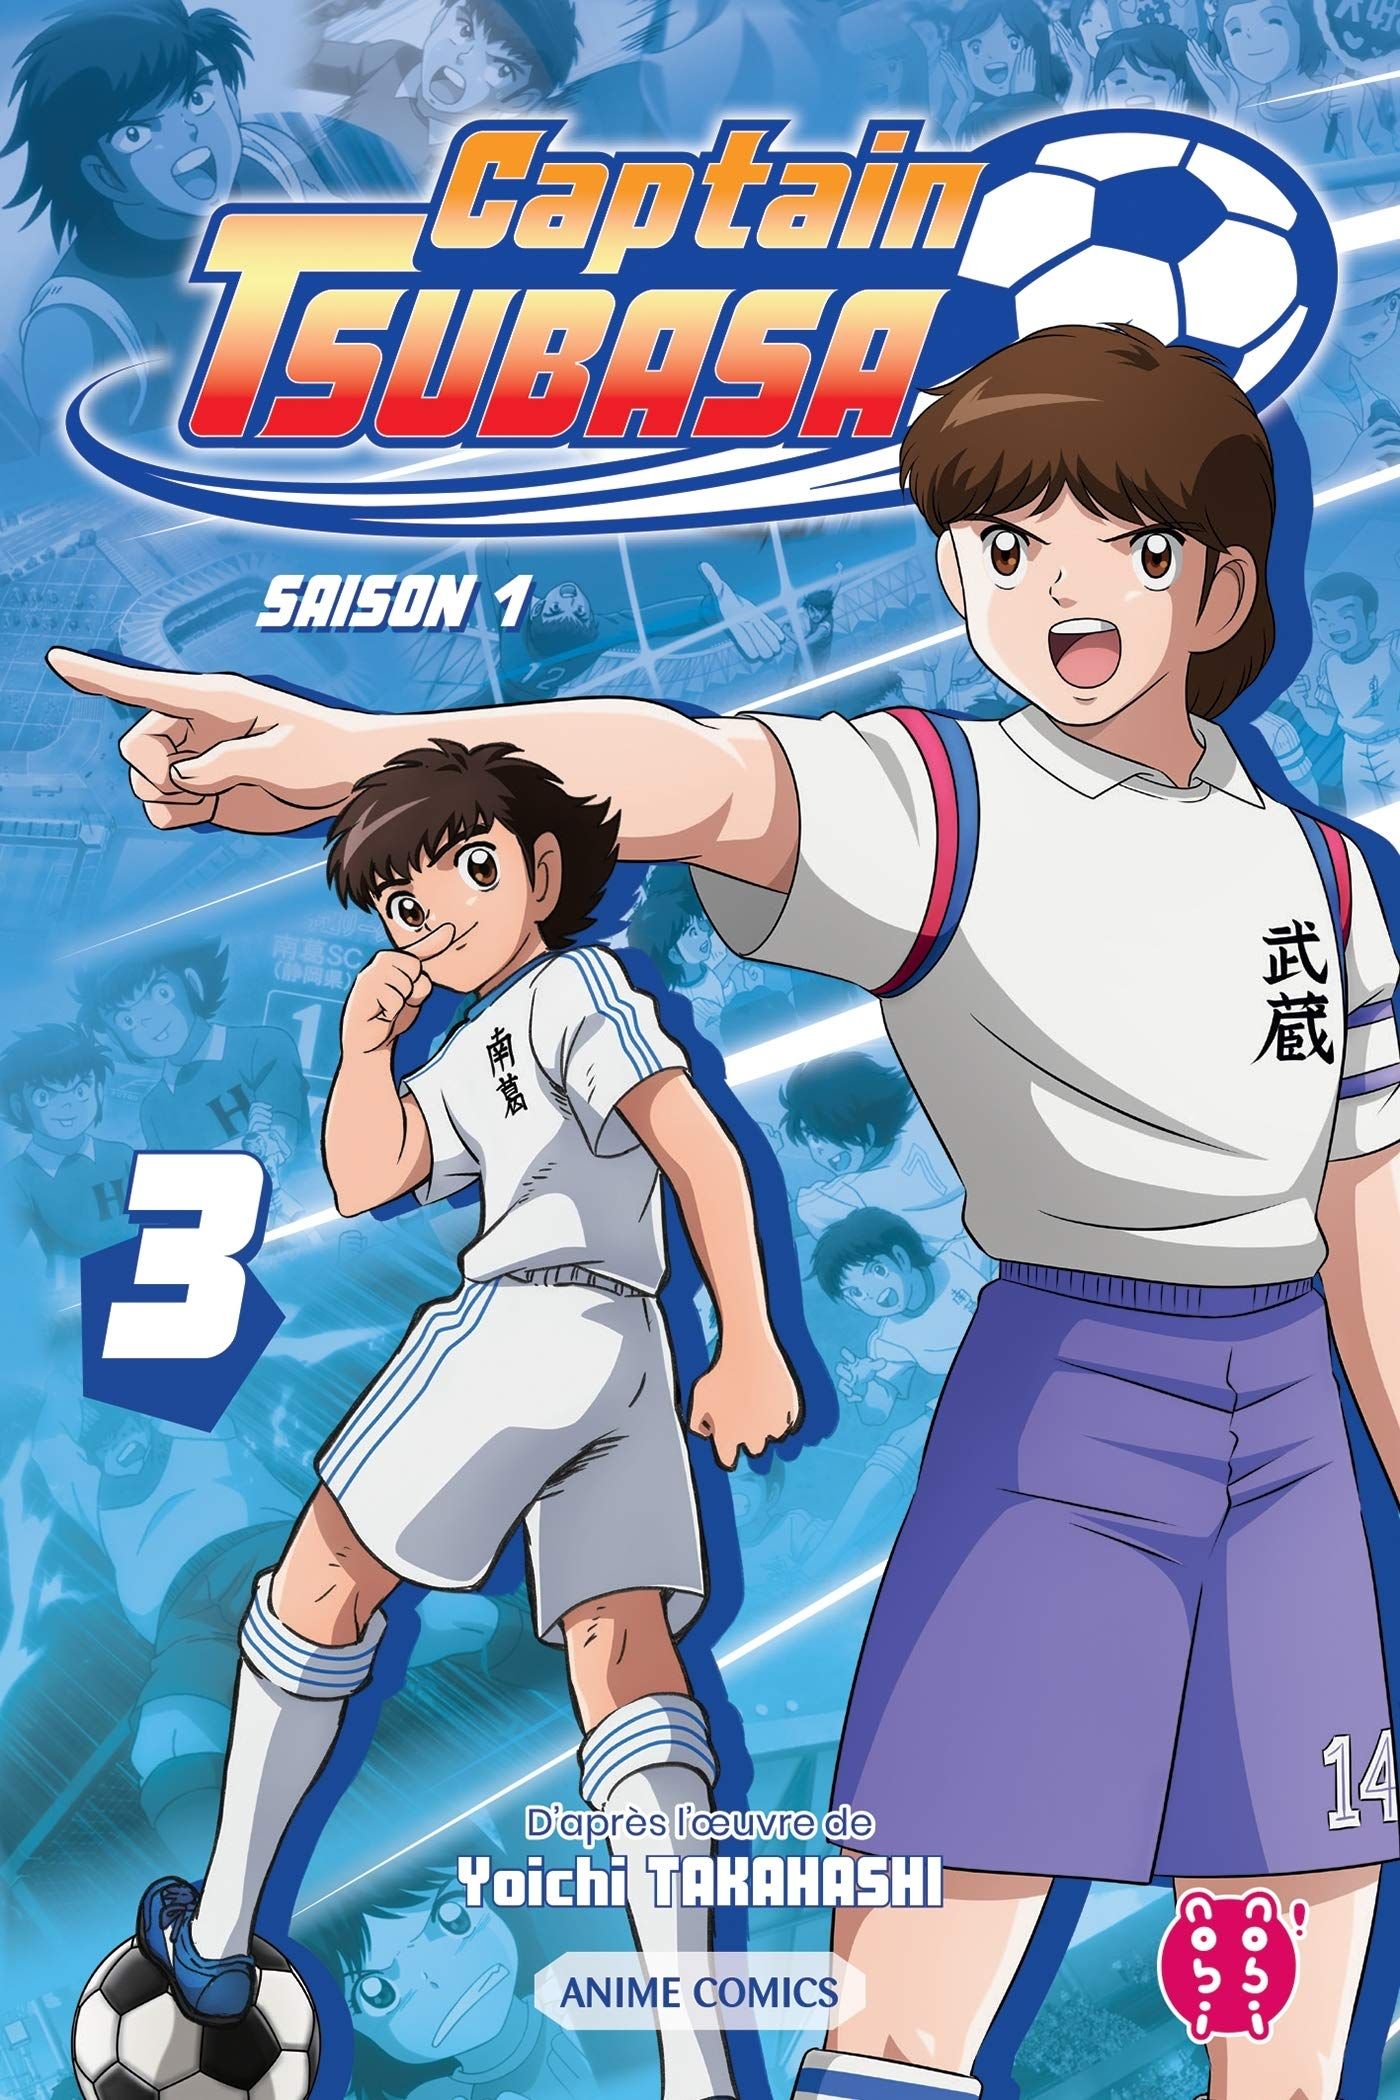 Captain Tsubasa - Anime Comics - Saison 1 Vol.3